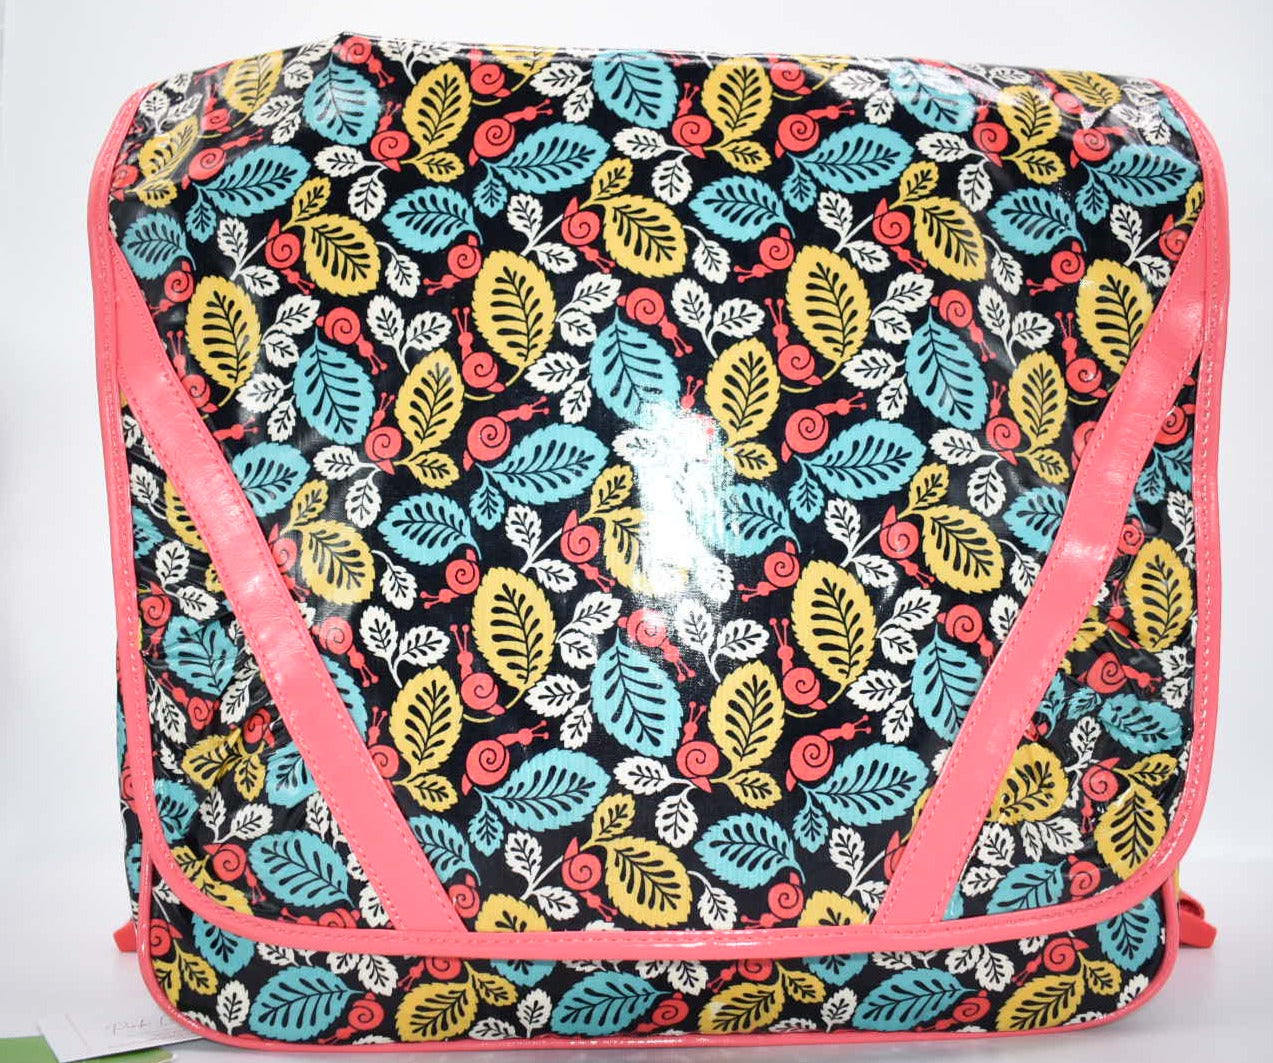 Vera Bradley Frill Messenger Bag in "Happy Snails" Pattern